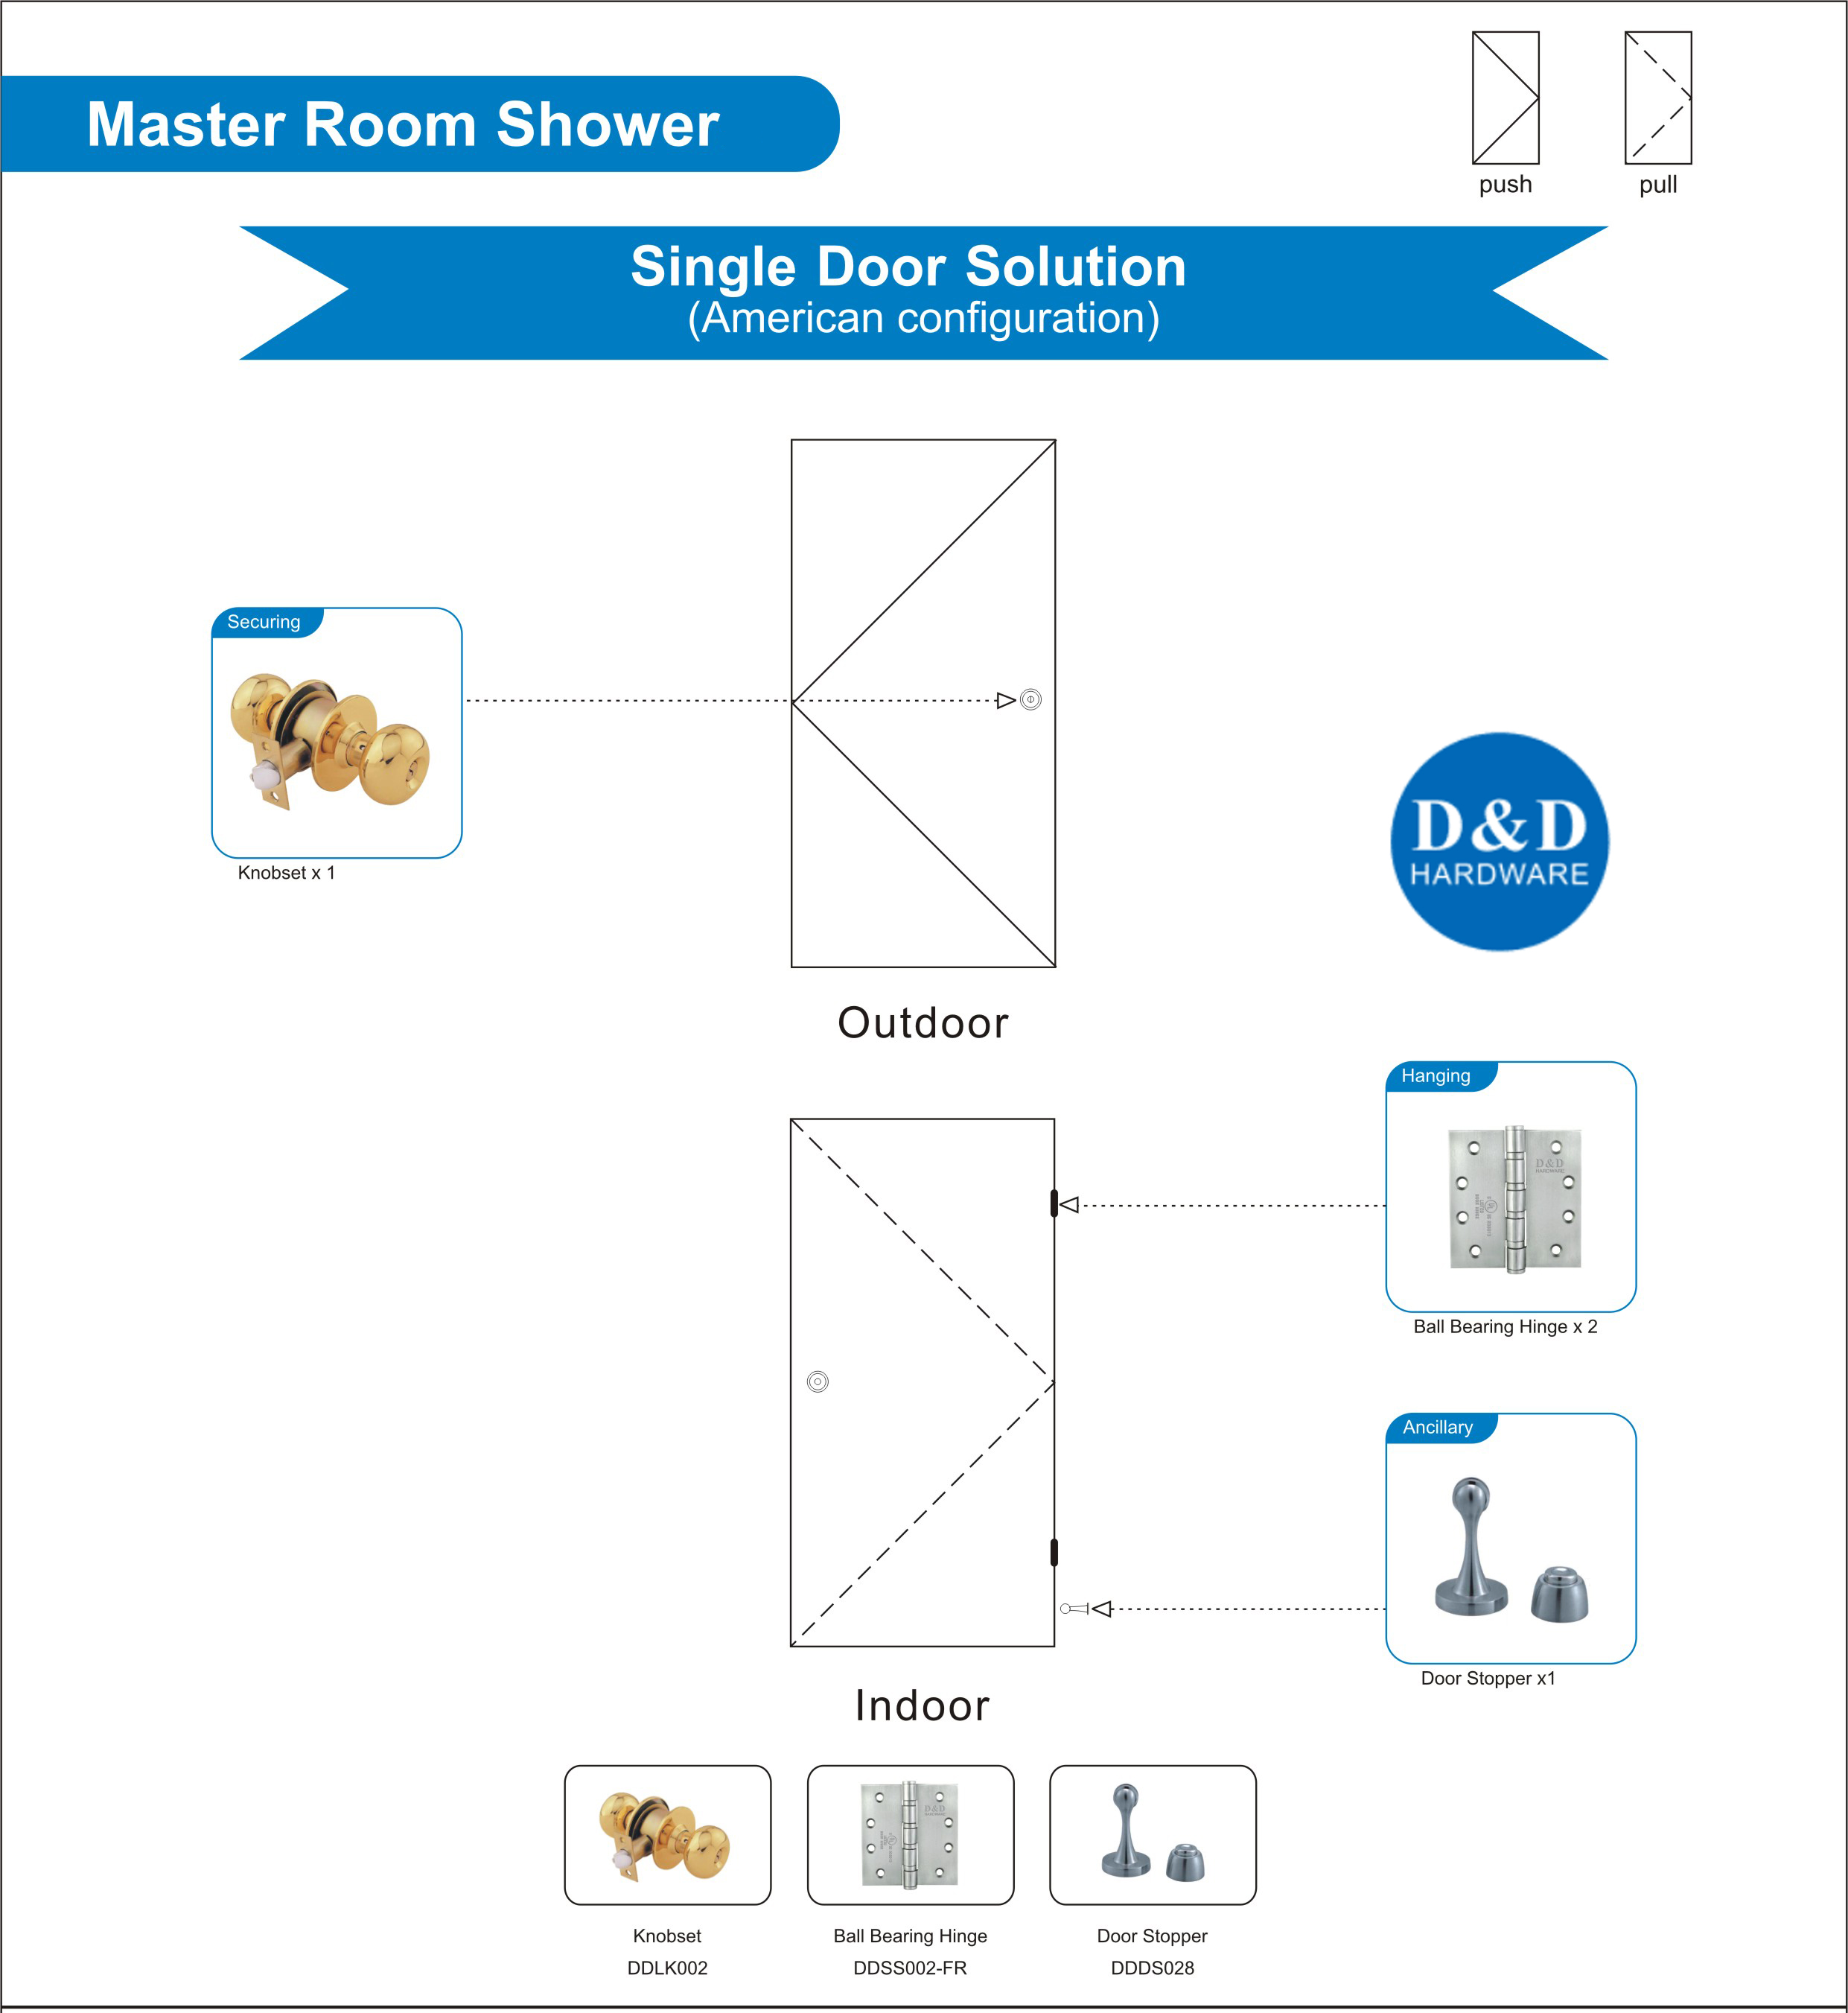 Building Opening Solution for Master Room Shower Single Door